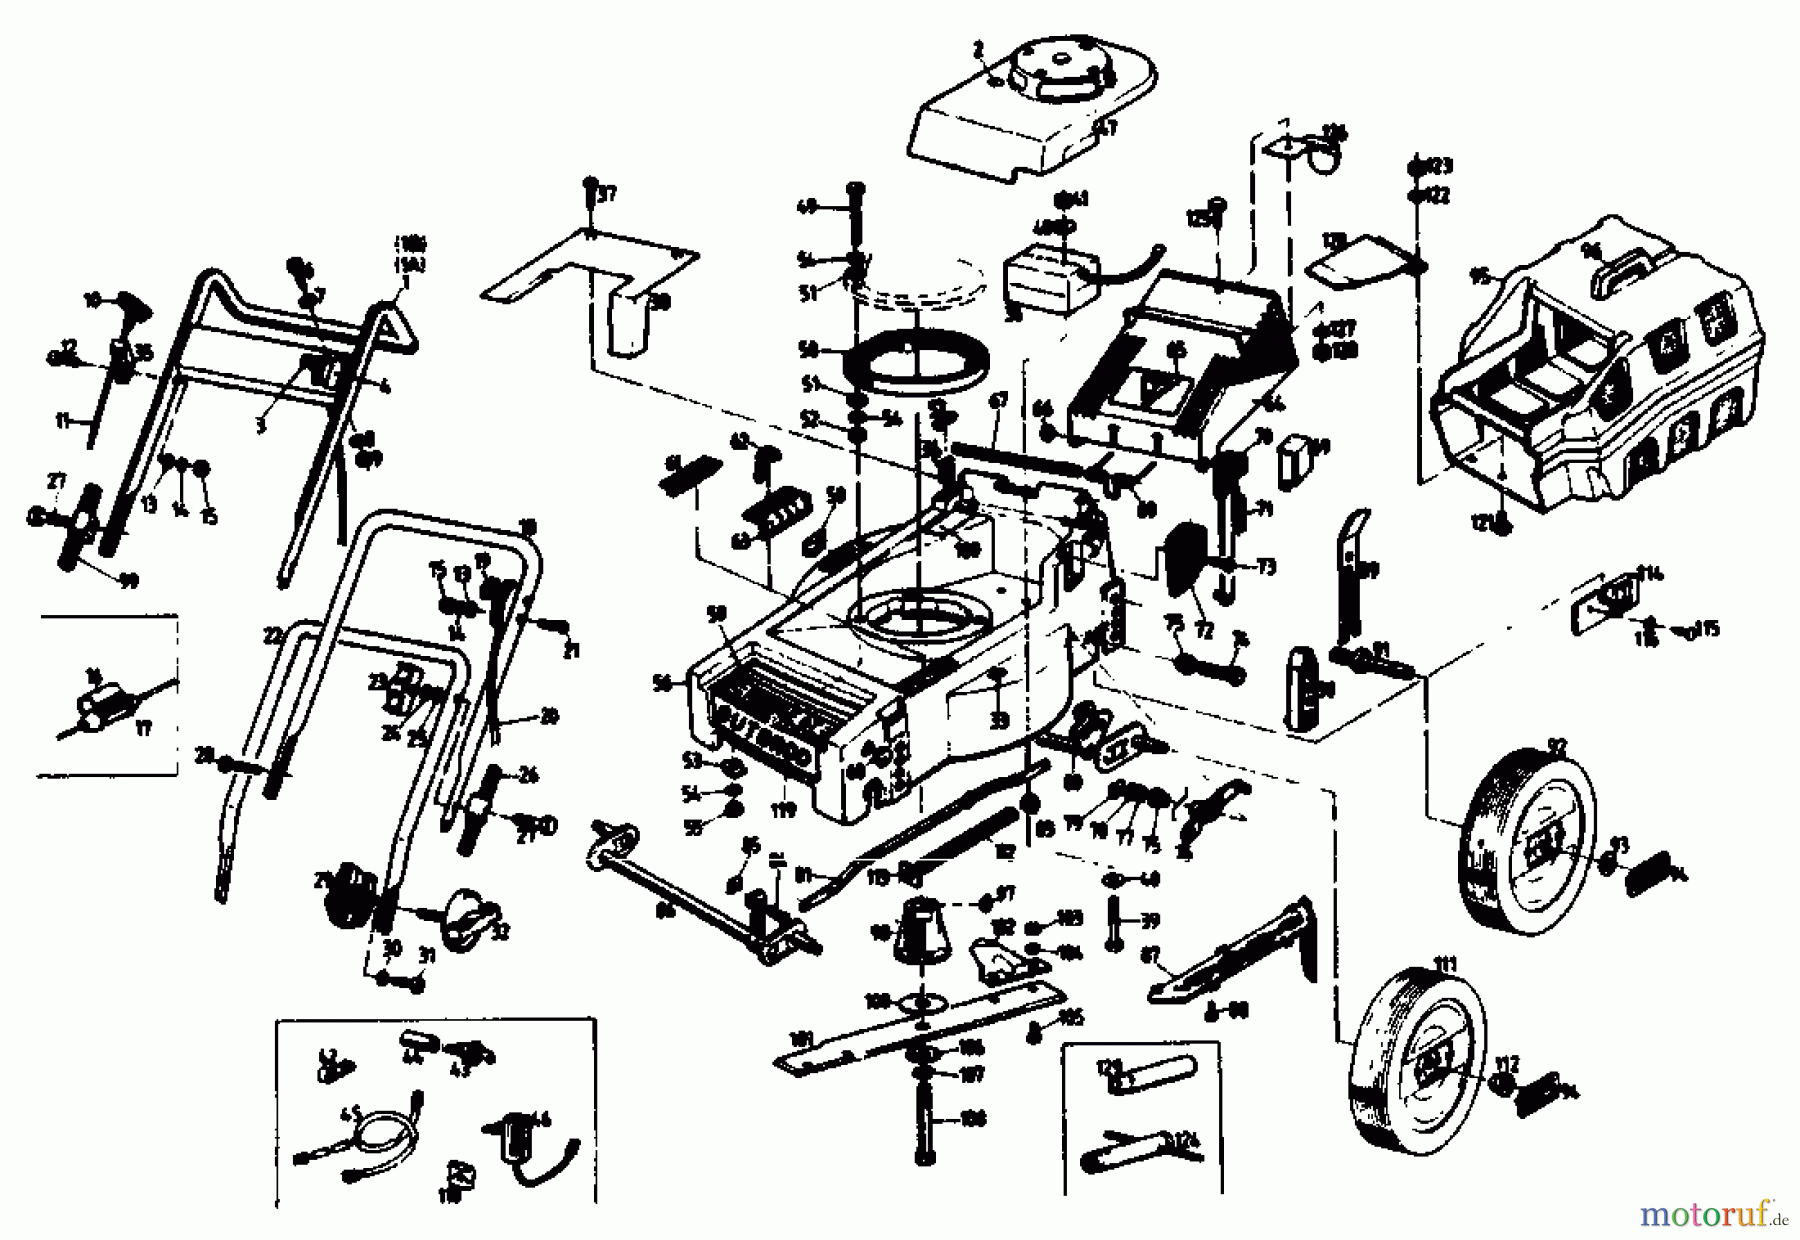  Gutbrod Petrol mower HB 40 L 02896.02  (1989) Basic machine